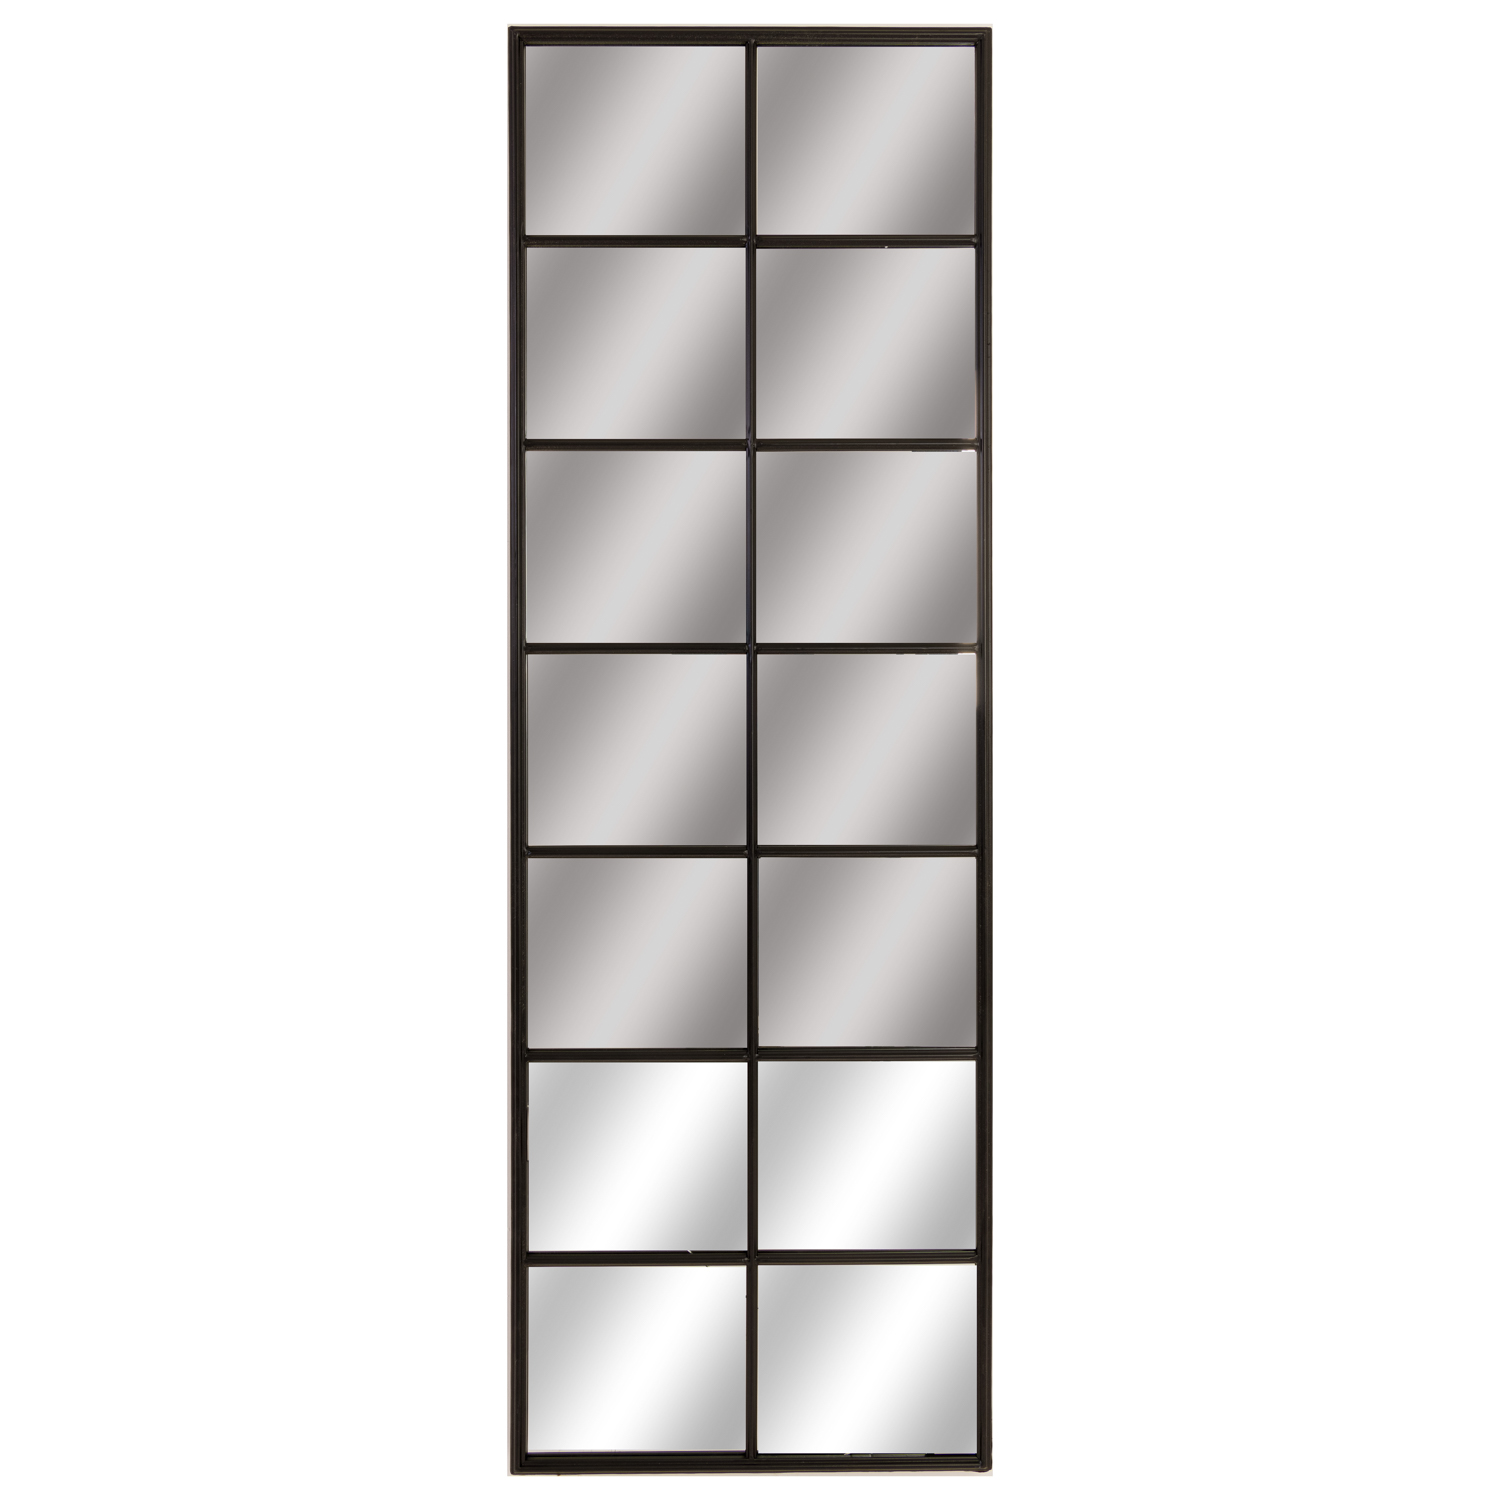 Tall Black Metal Window Mirror - Image 1